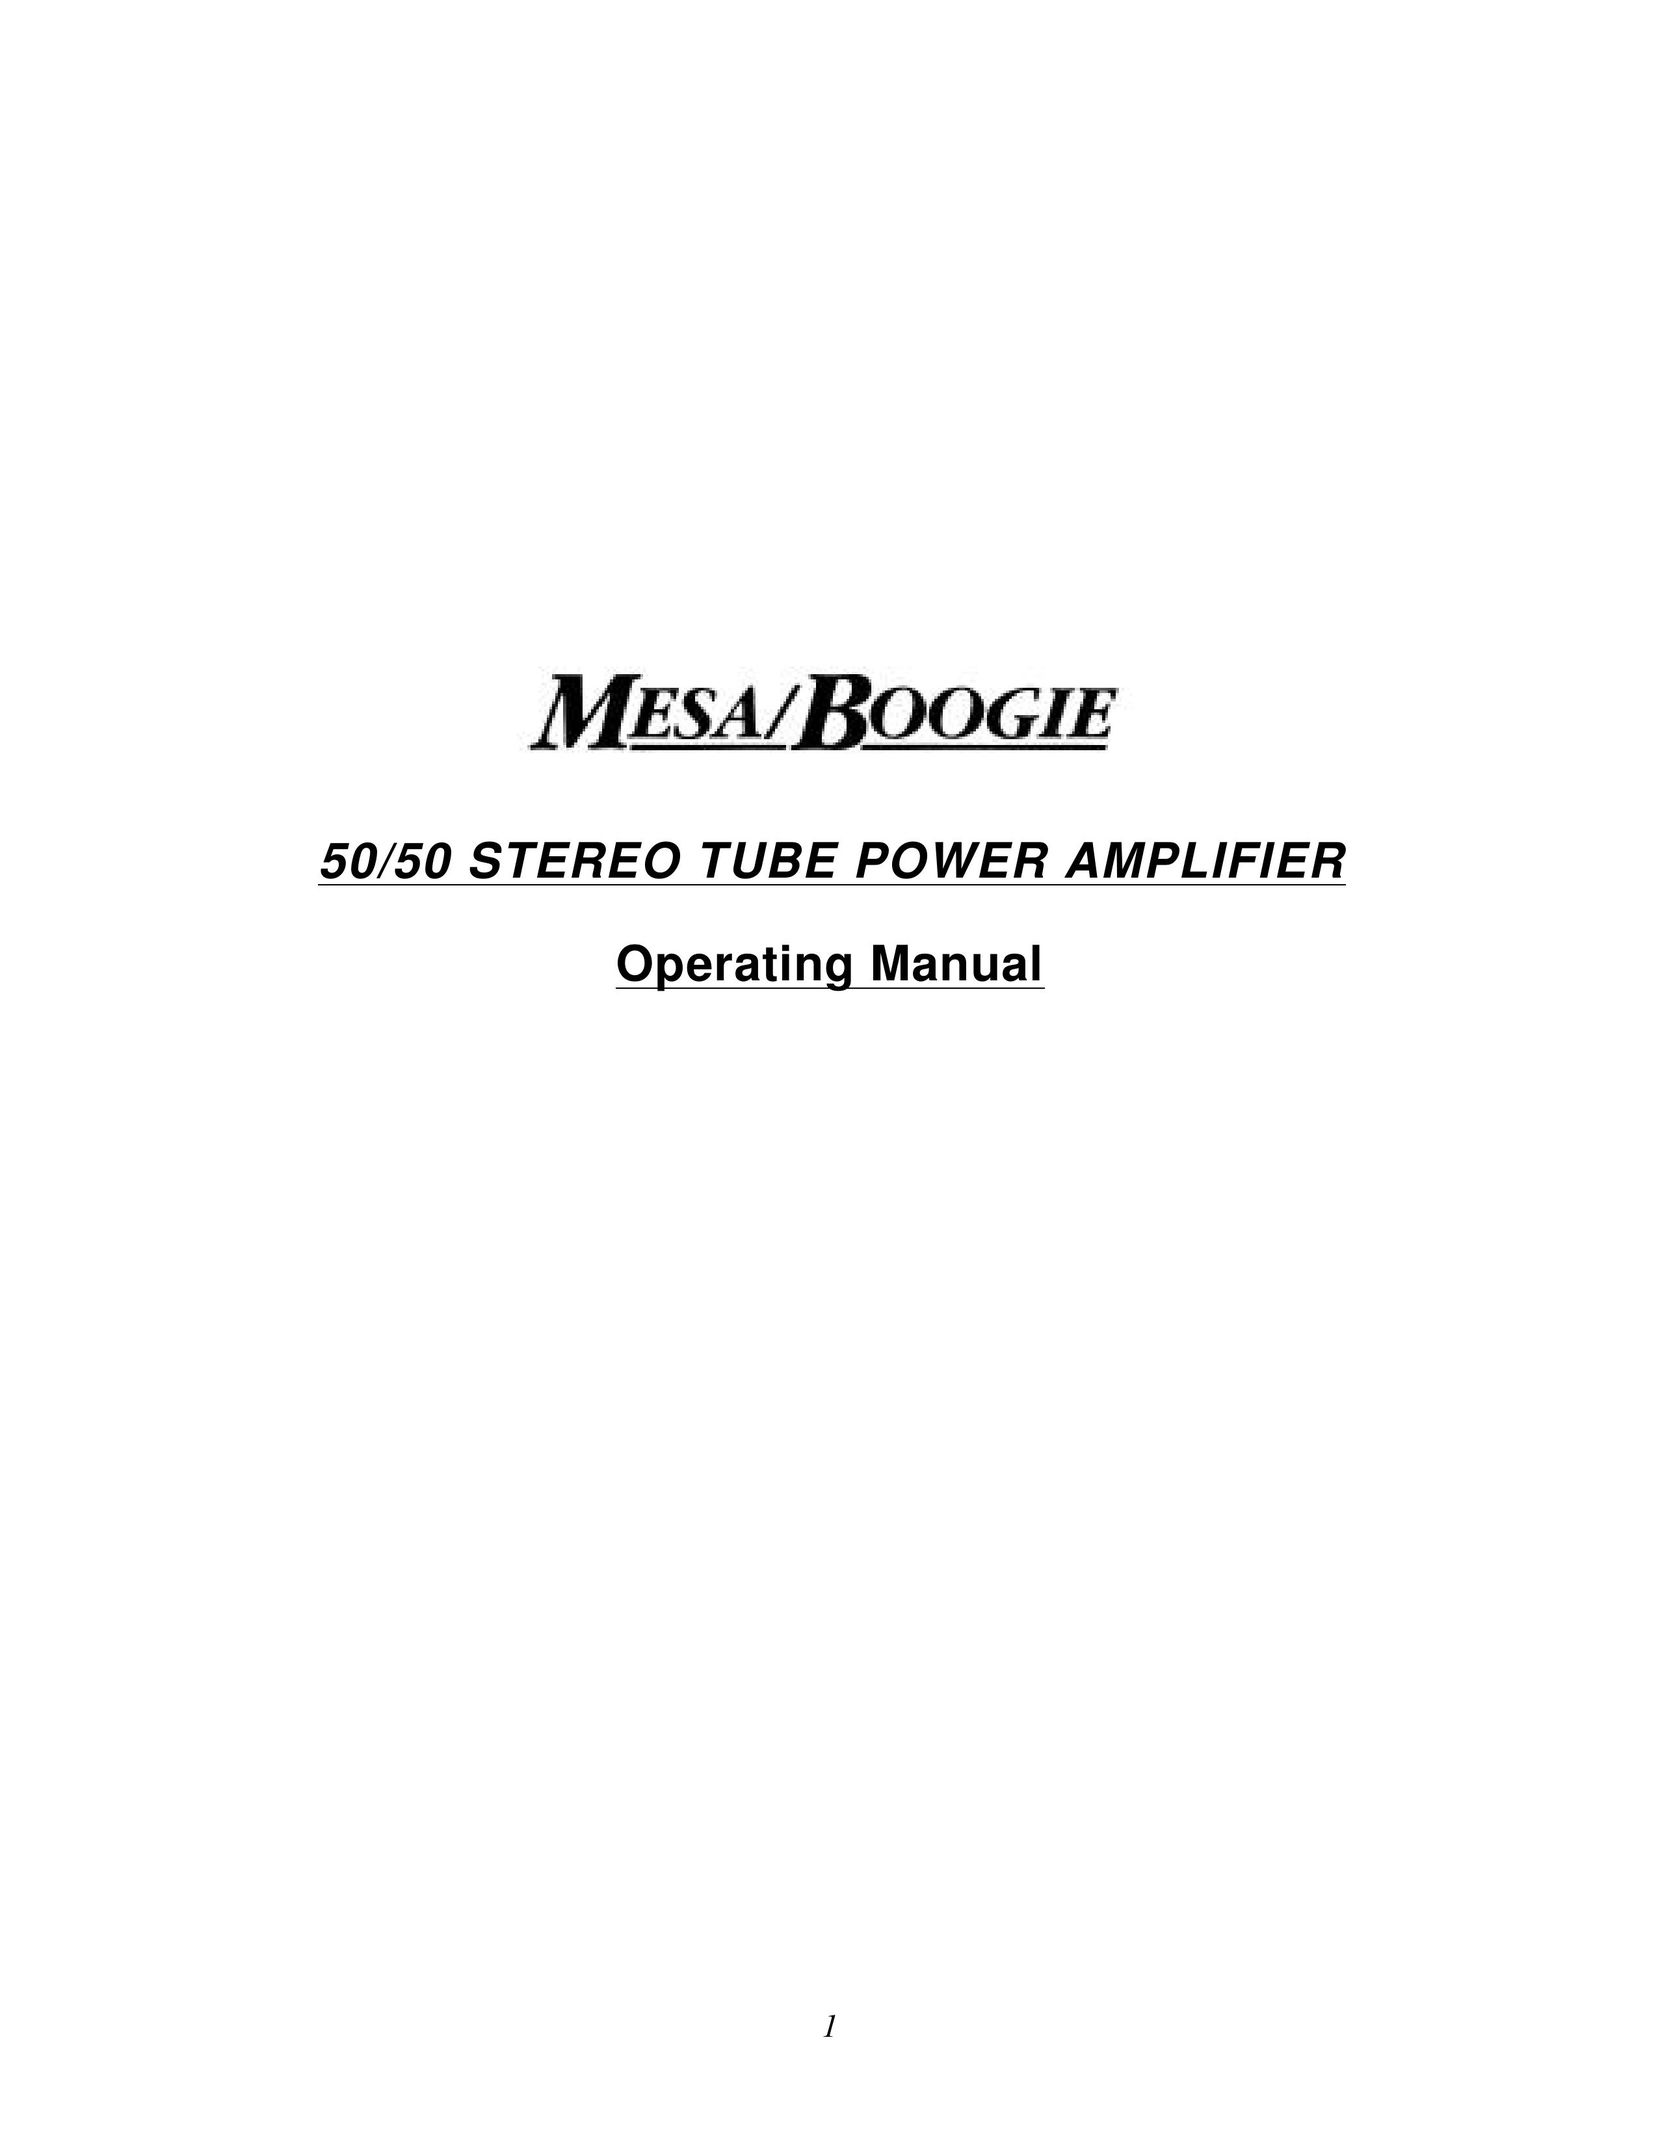 Mesa/Boogie 50/50 STEREO TUBE Stereo Amplifier User Manual